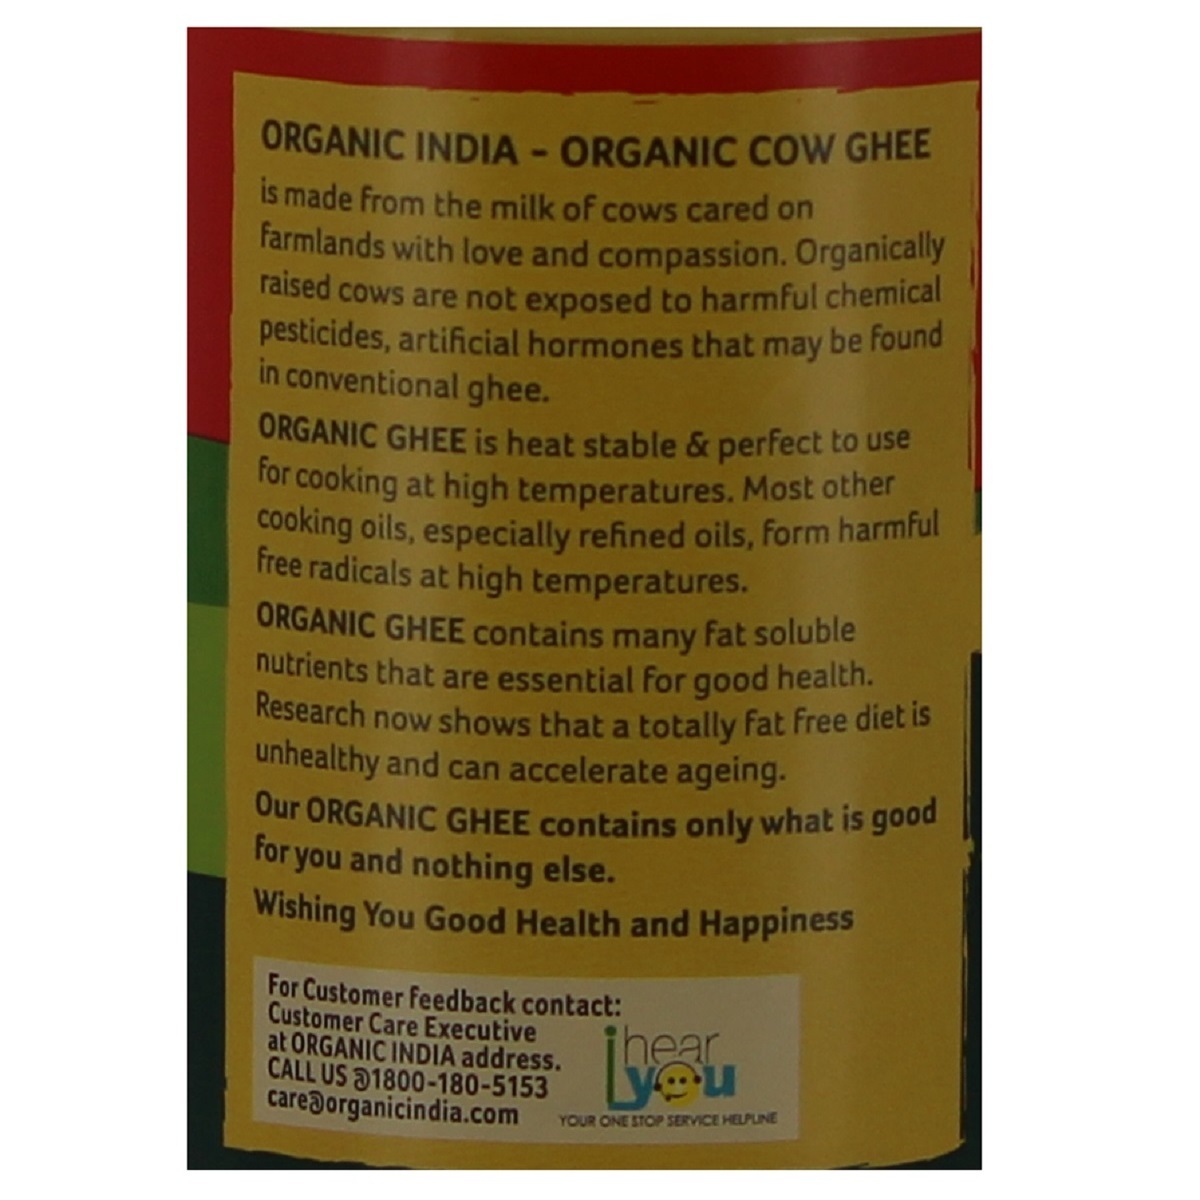 Organic India Pure Cow Ghee 500g